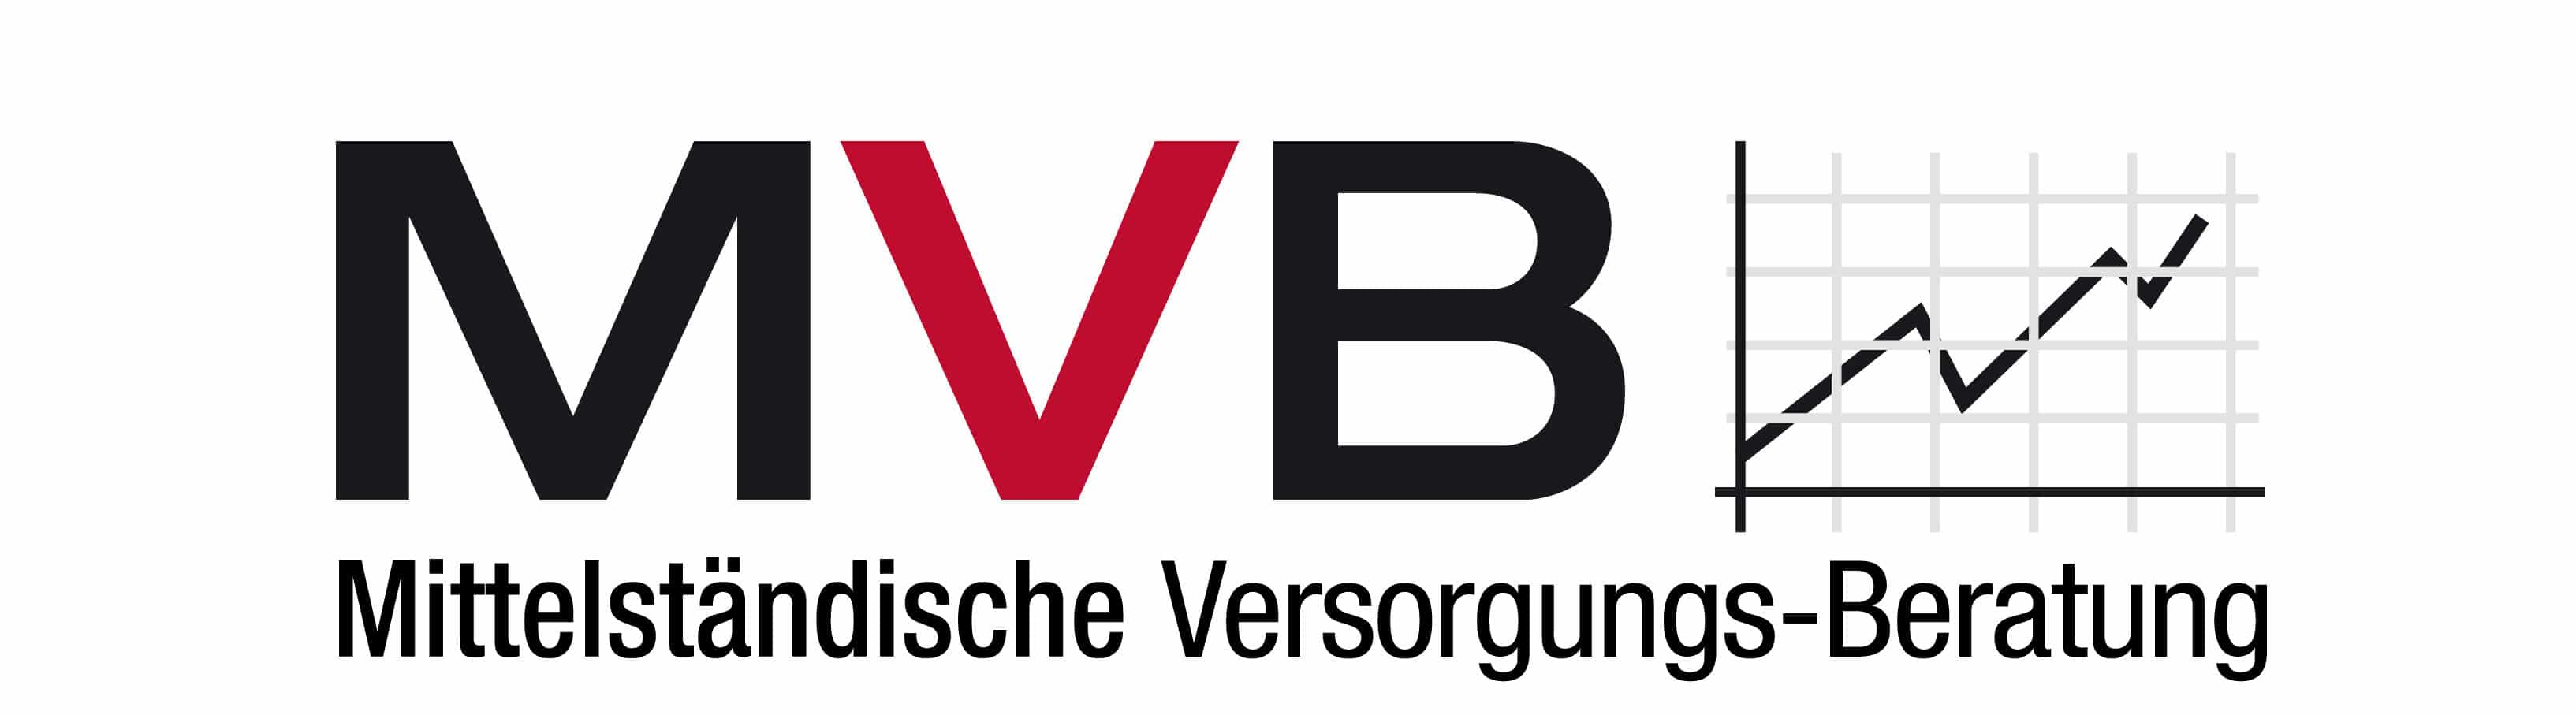 logo_MVB_rot01